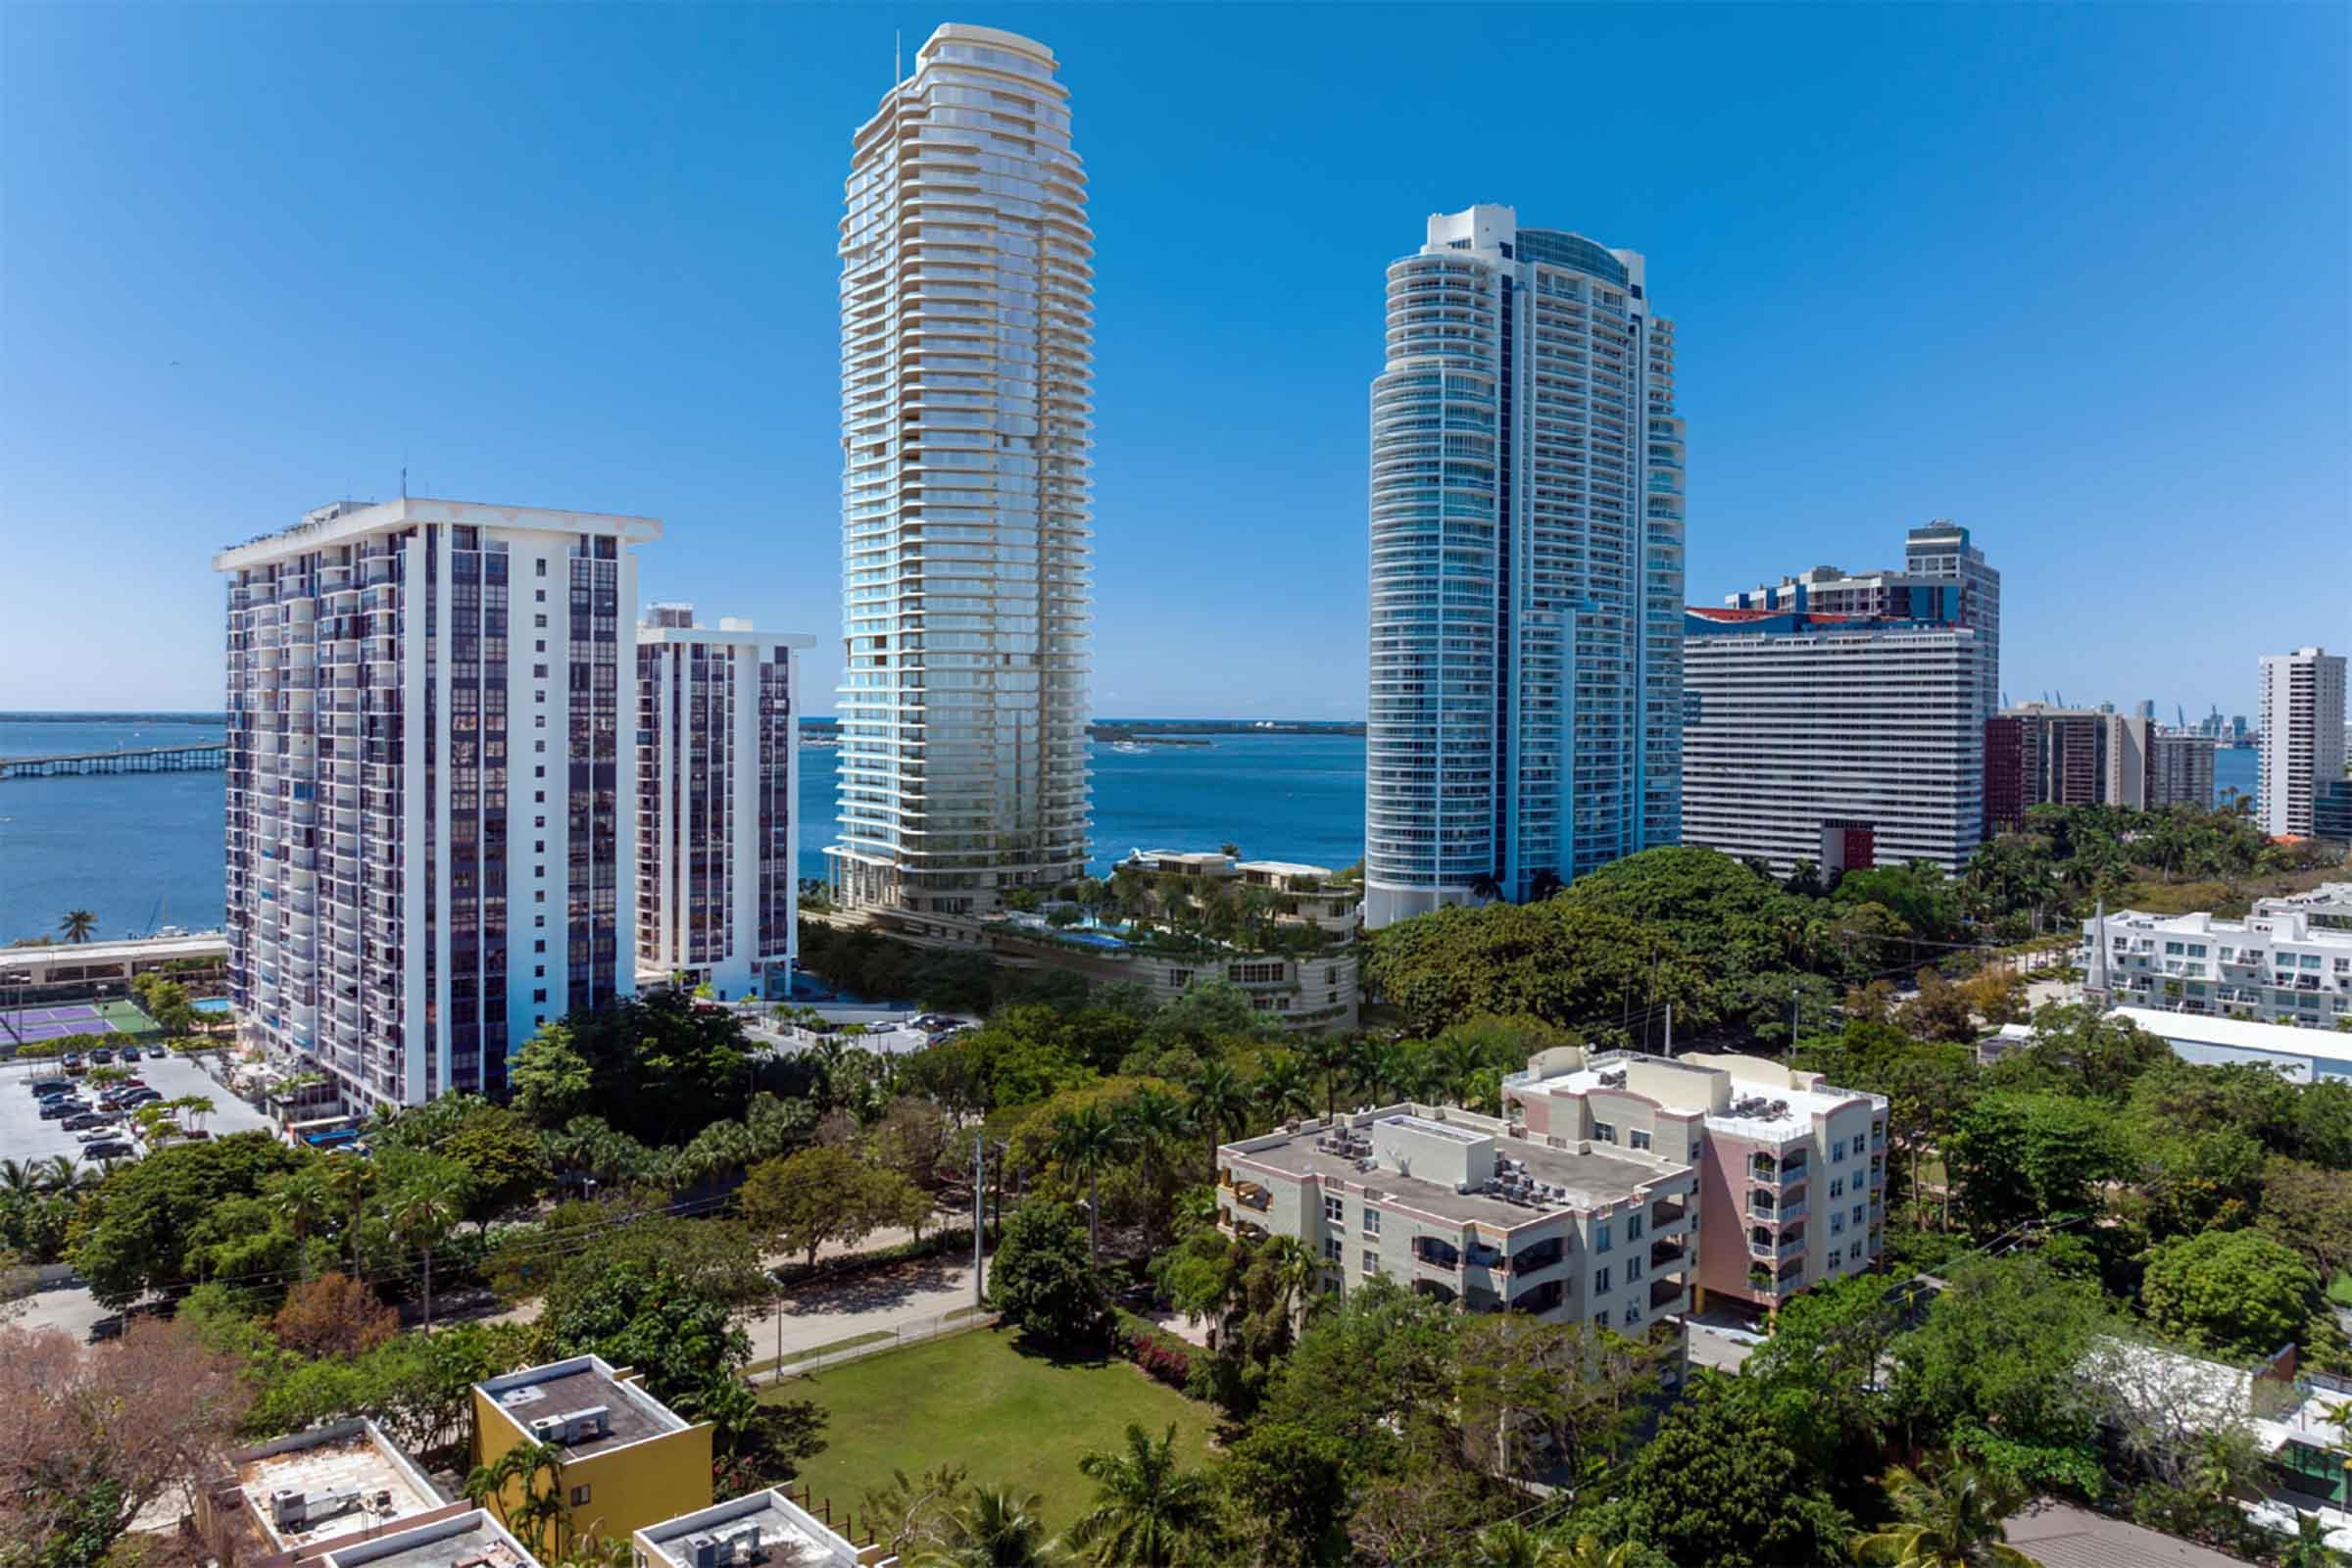 St. 里吉斯住宅，迈阿密在布里克尔申请施工许可证+发布一个新的设施